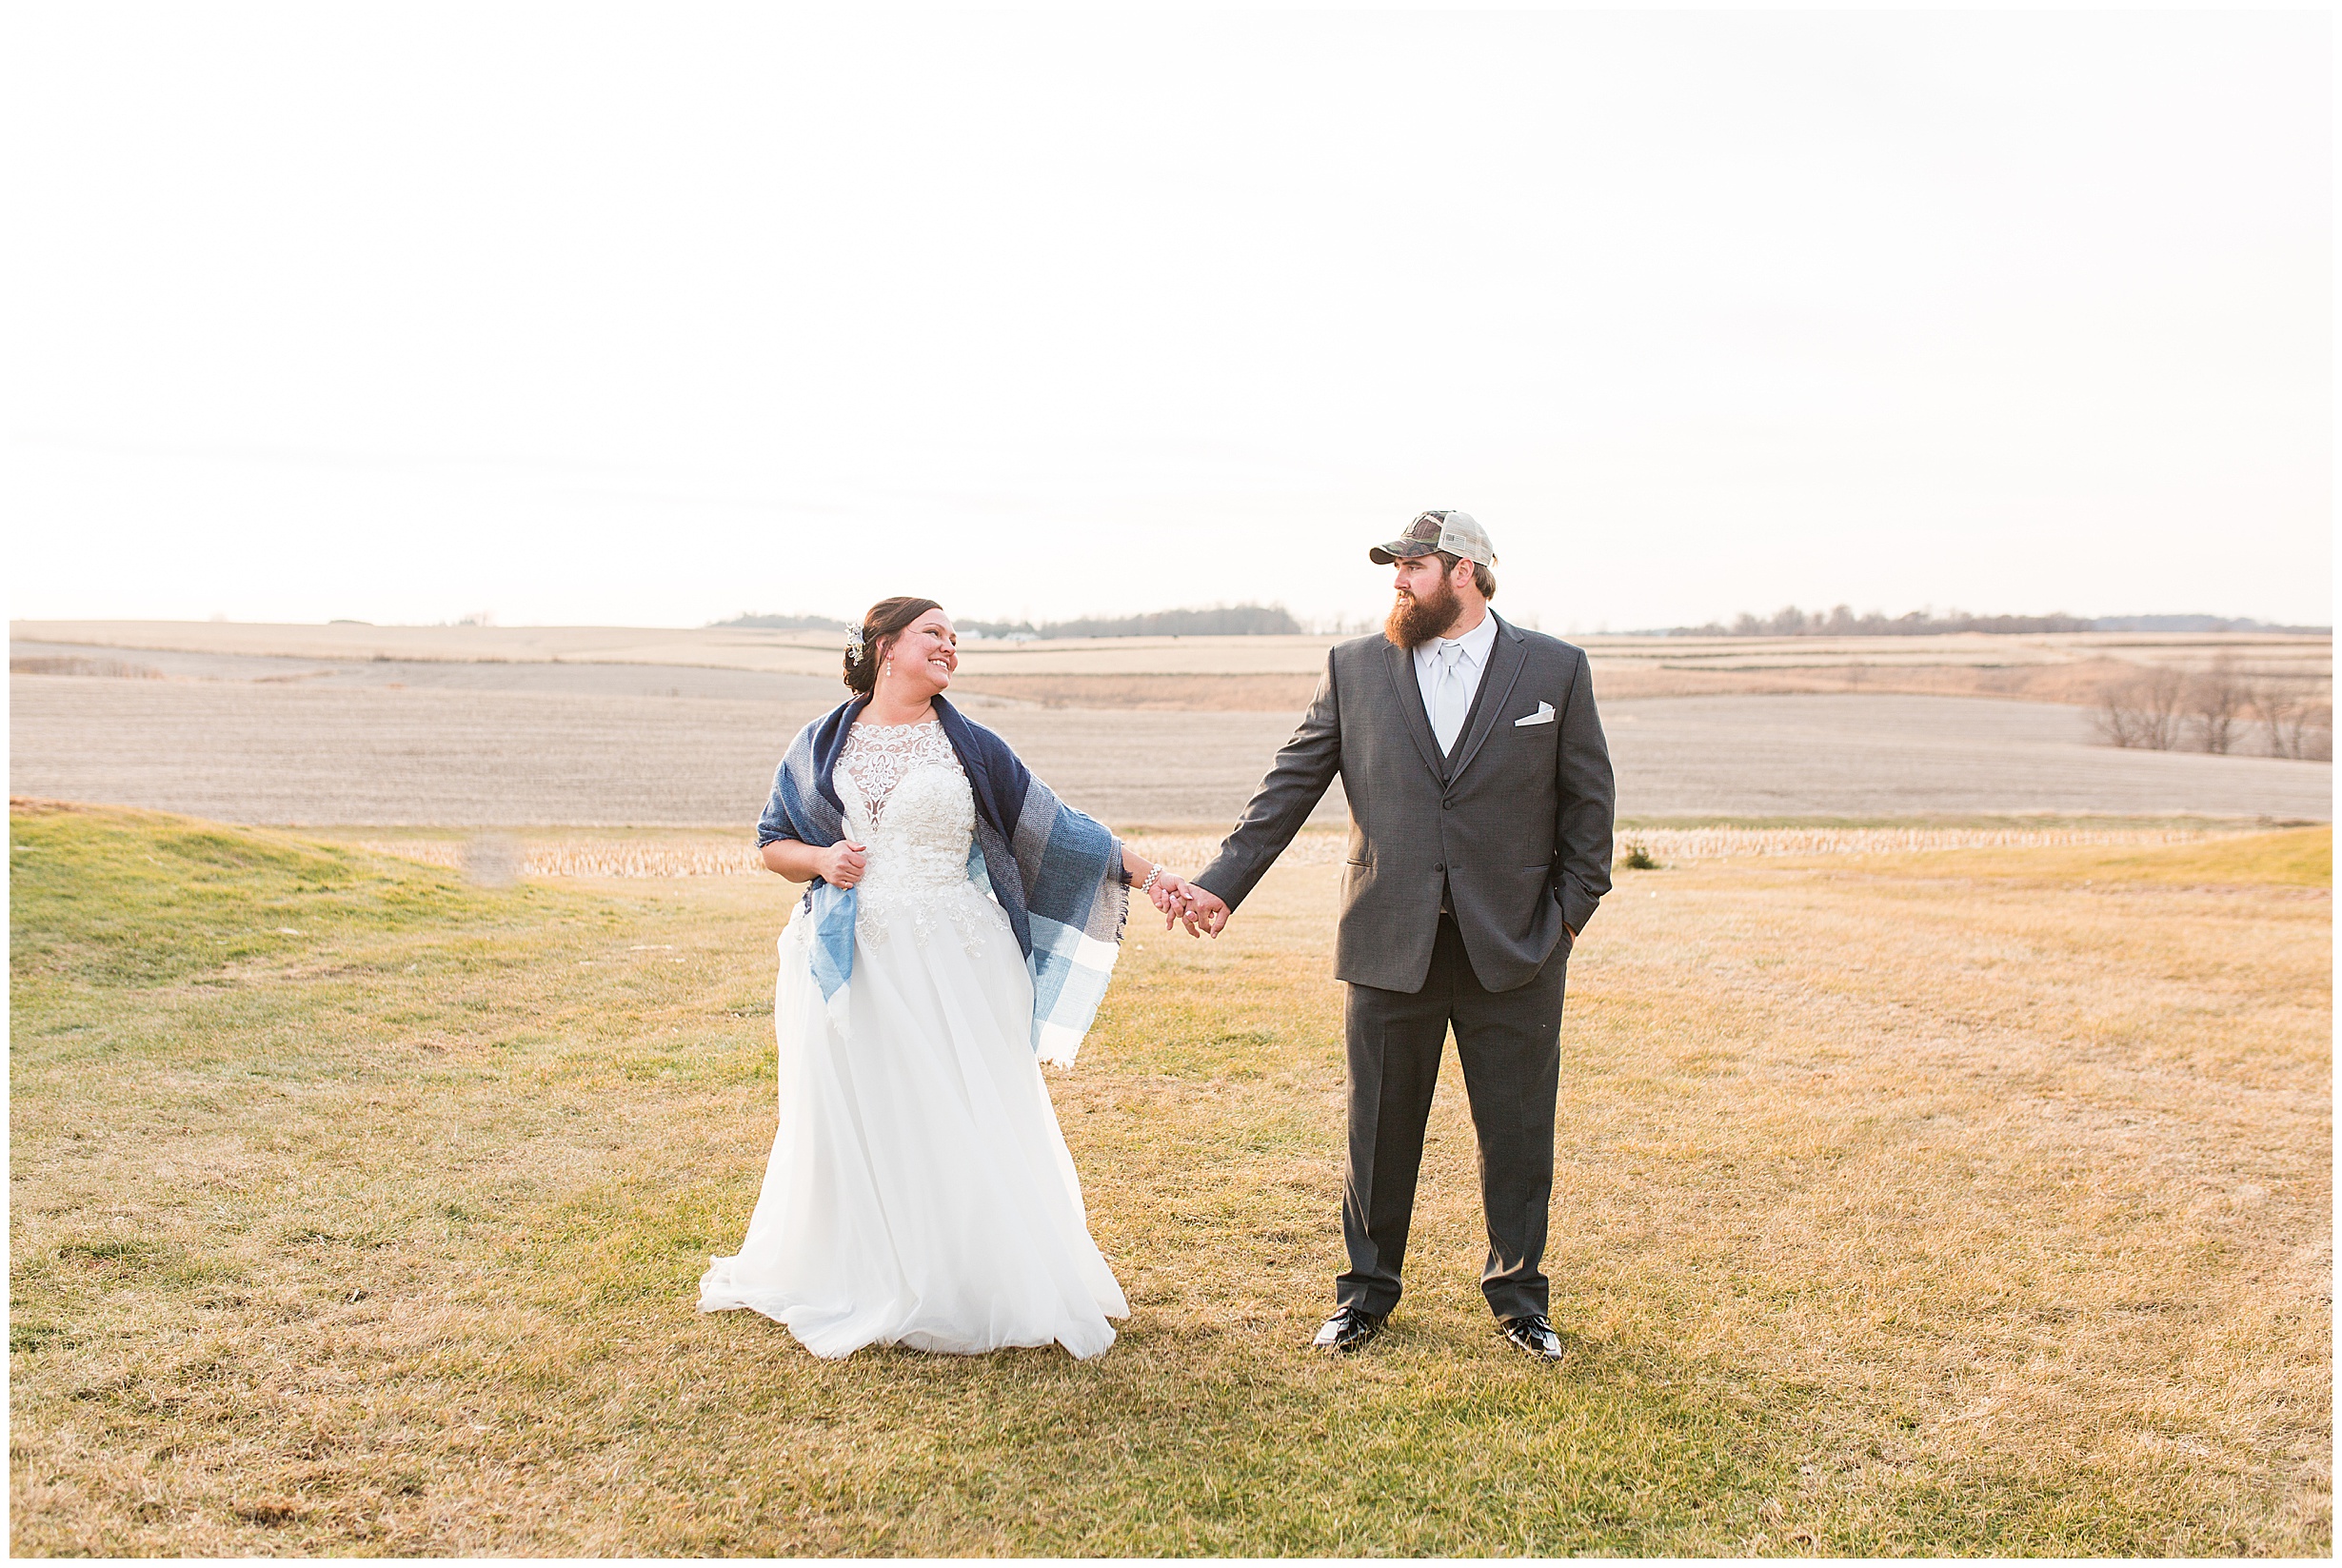 Iowa City Photographers - Decorah Wedding -Megan Snitker Photography_0161.jpg